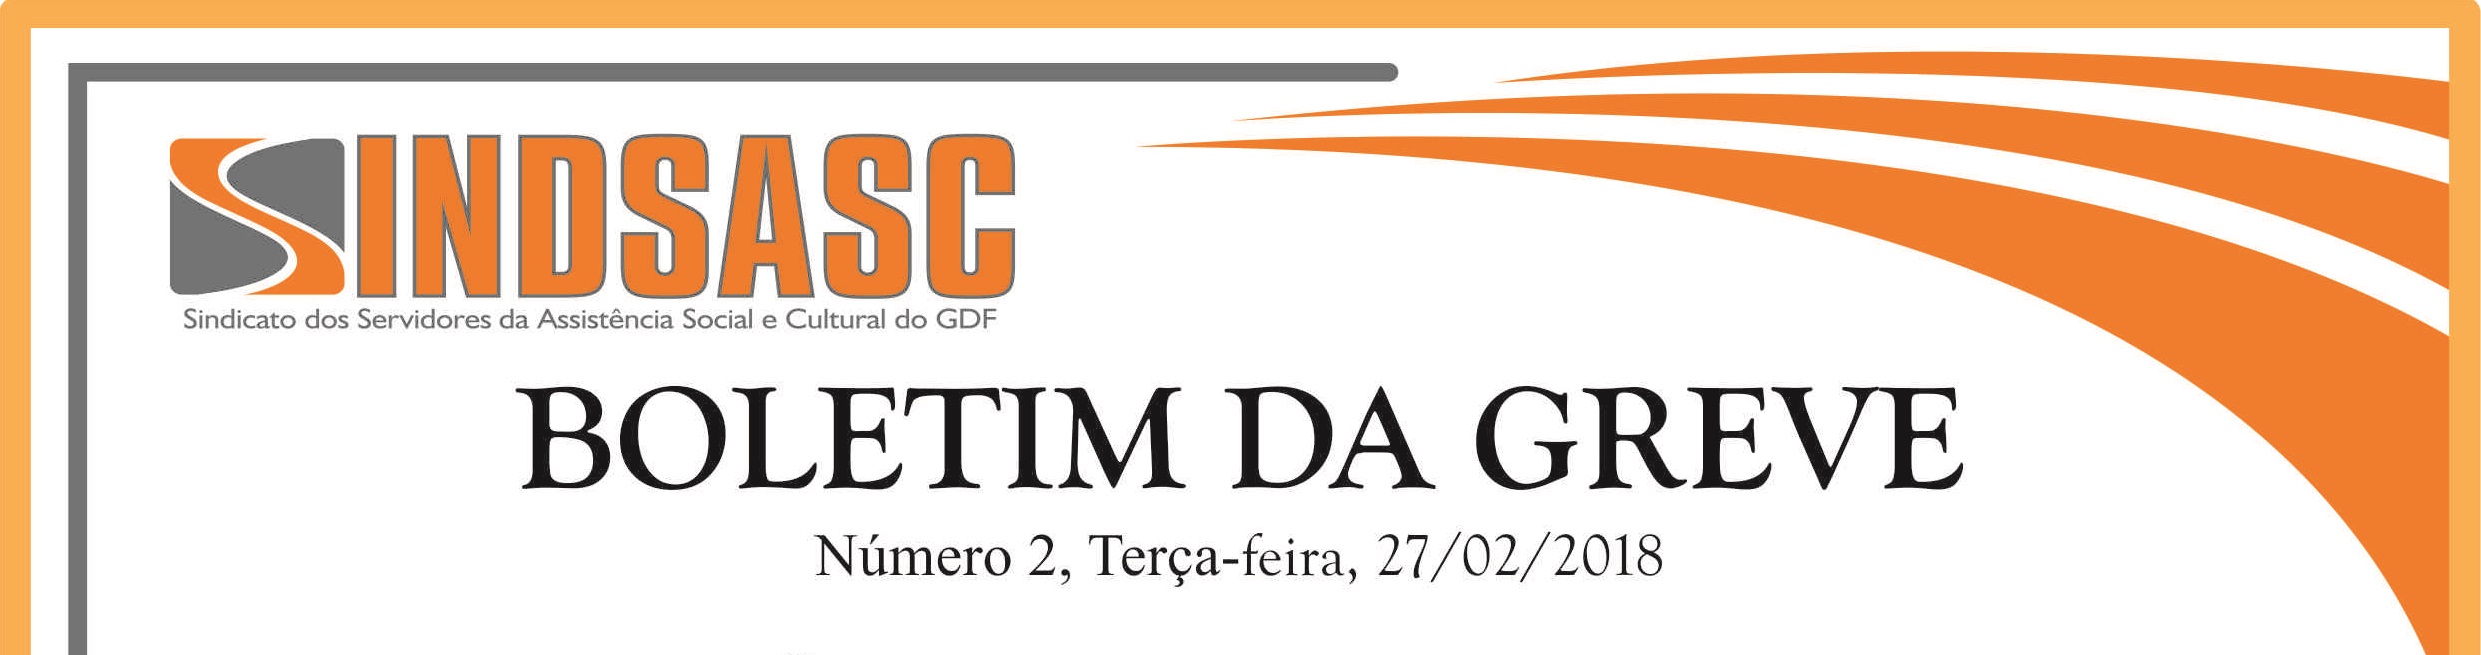 BOLETIM DA GREVE - NÚMERO 2 - TERÇA-FEIRA - 27/02/2018